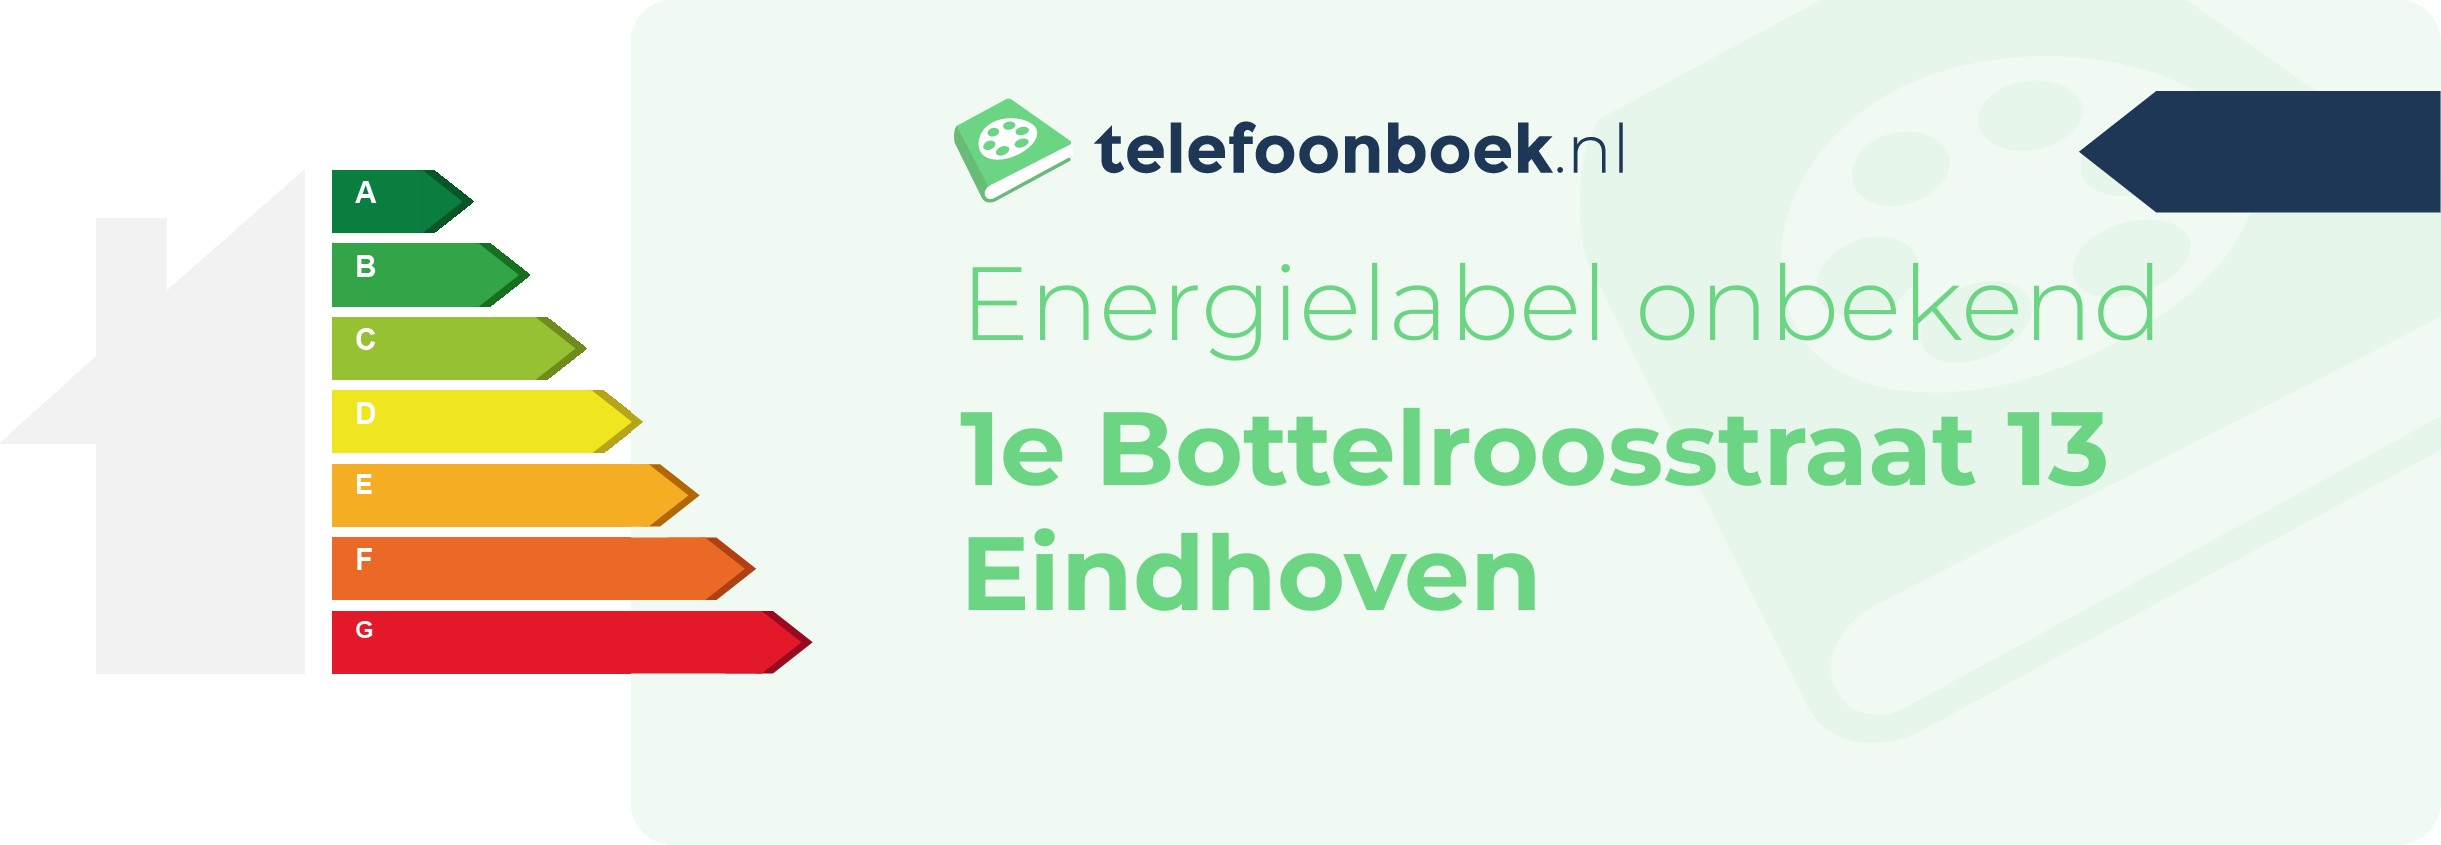 Energielabel 1e Bottelroosstraat 13 Eindhoven